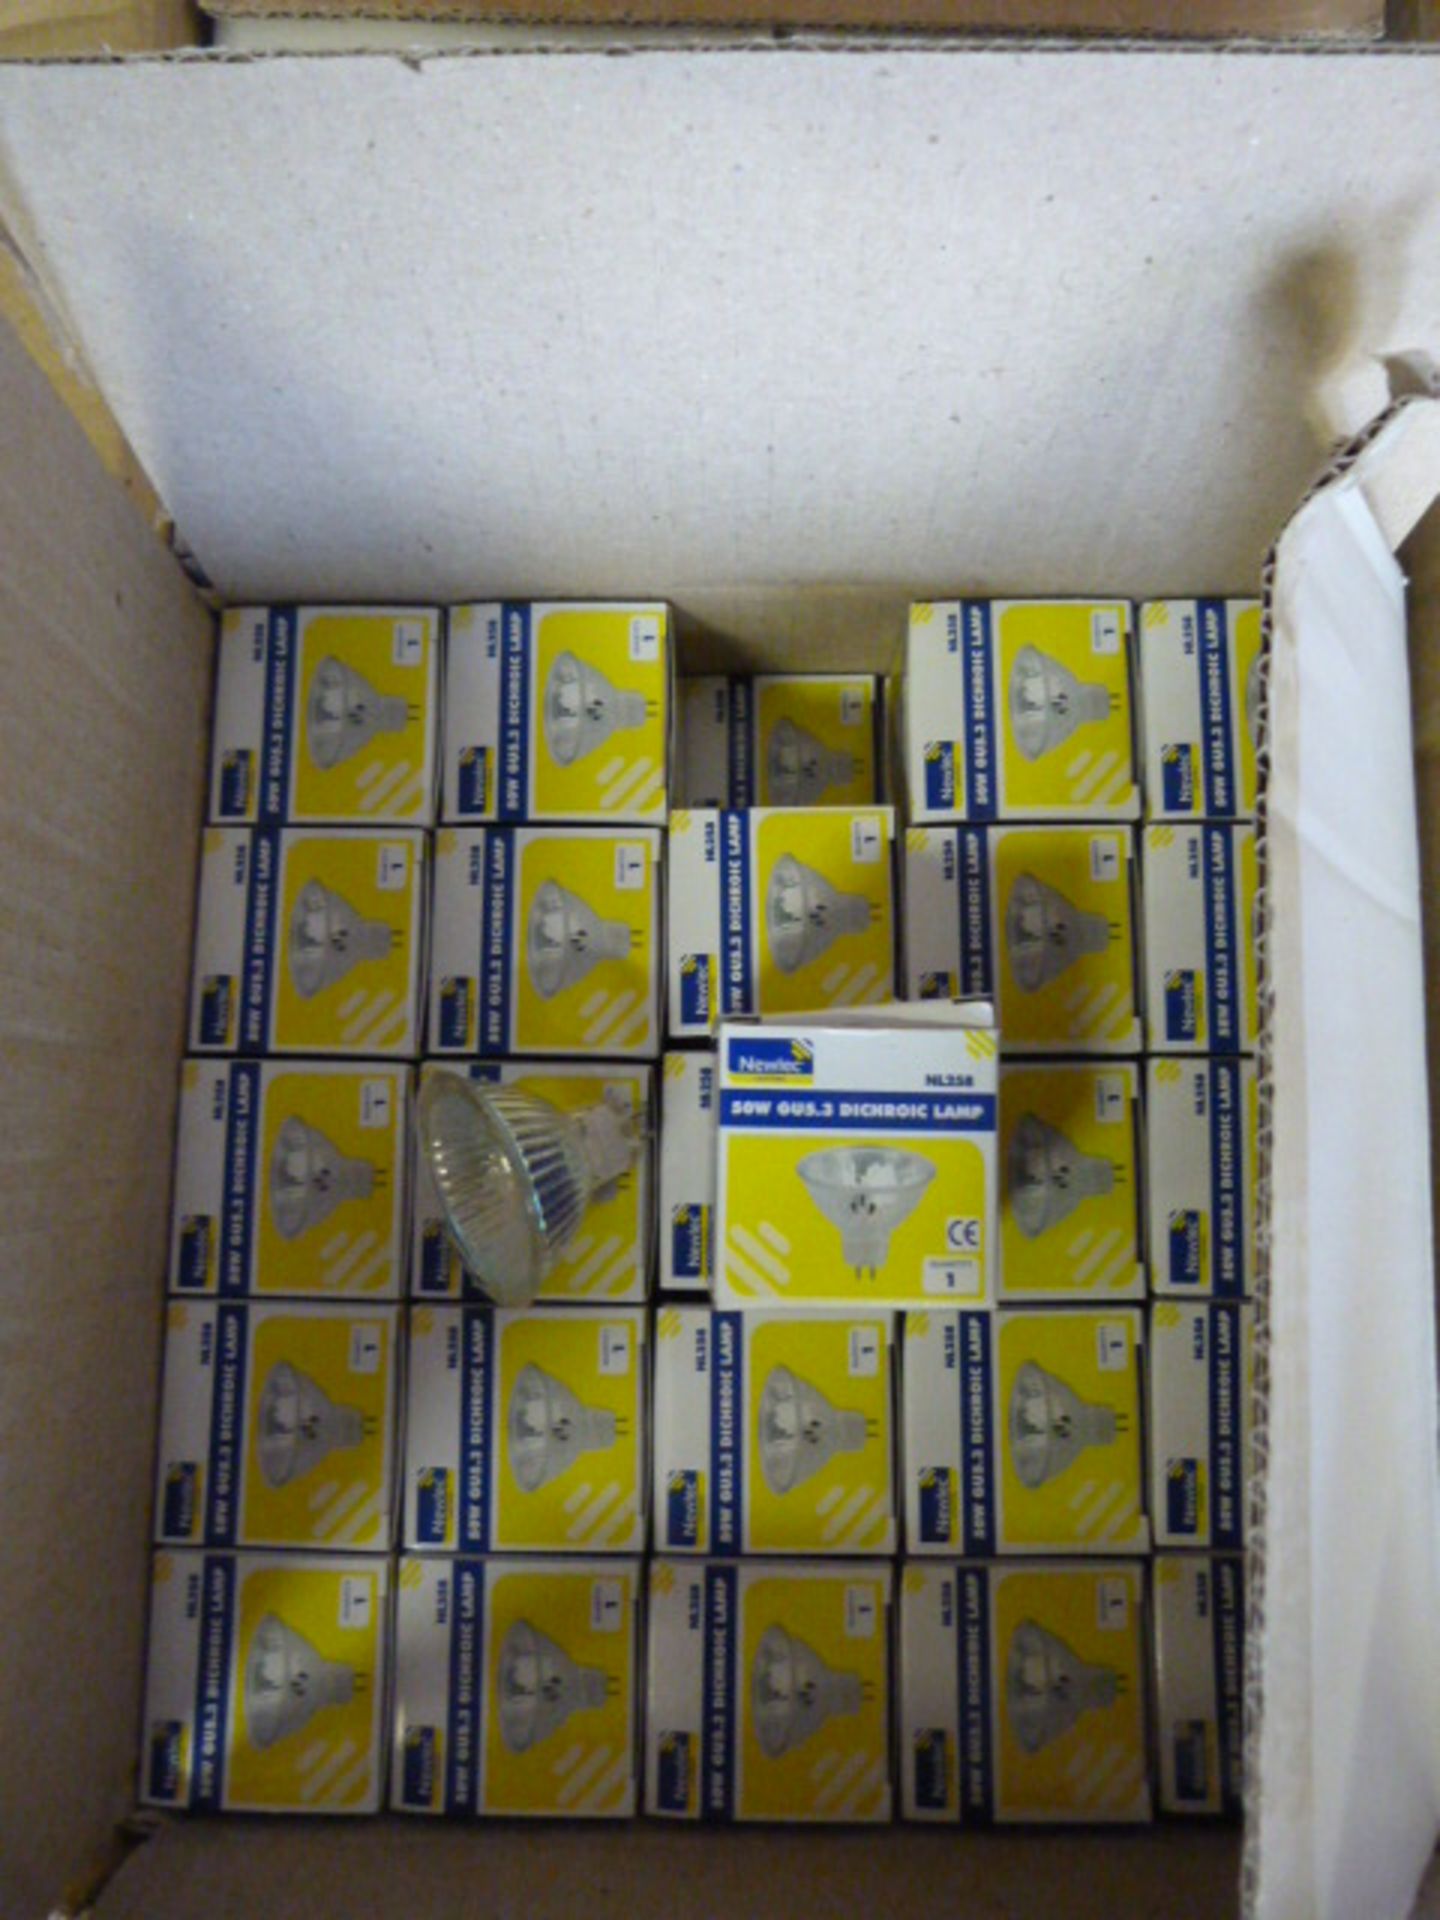 *Box of 200 Newlec NL258 50W Dichroic Lamps